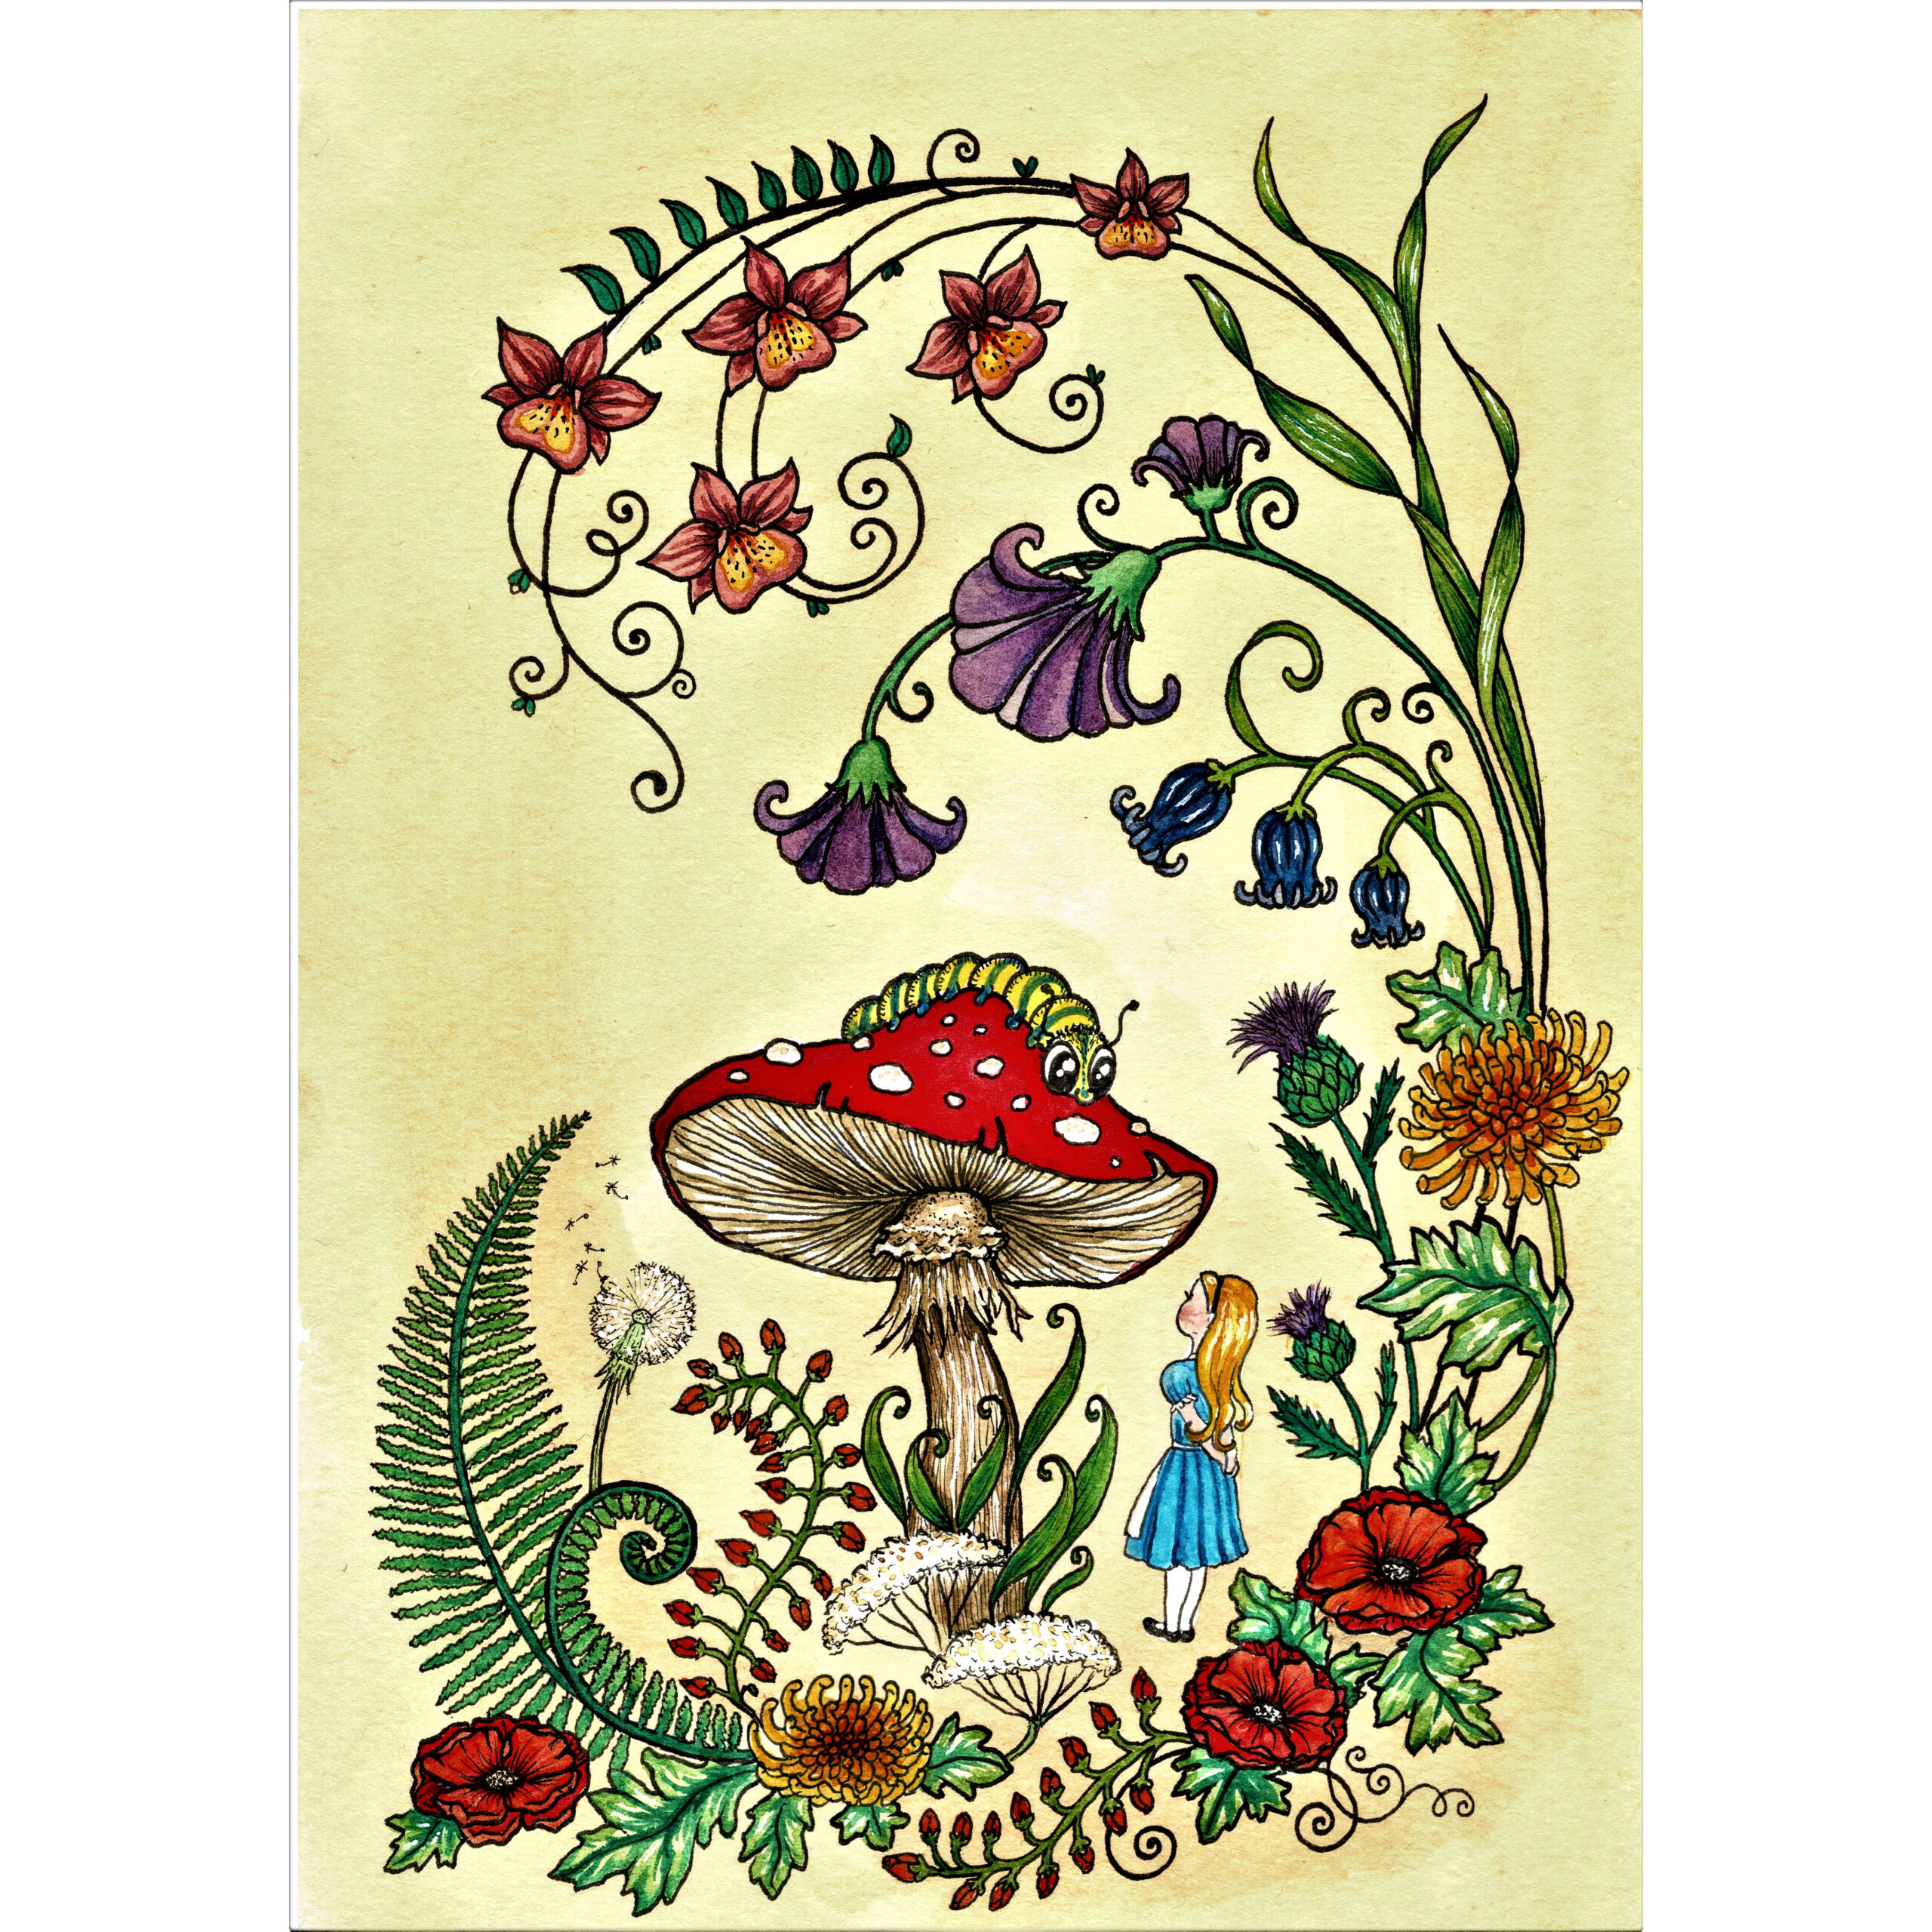 Alice in Wonderland Print by Jenni Kilgallon